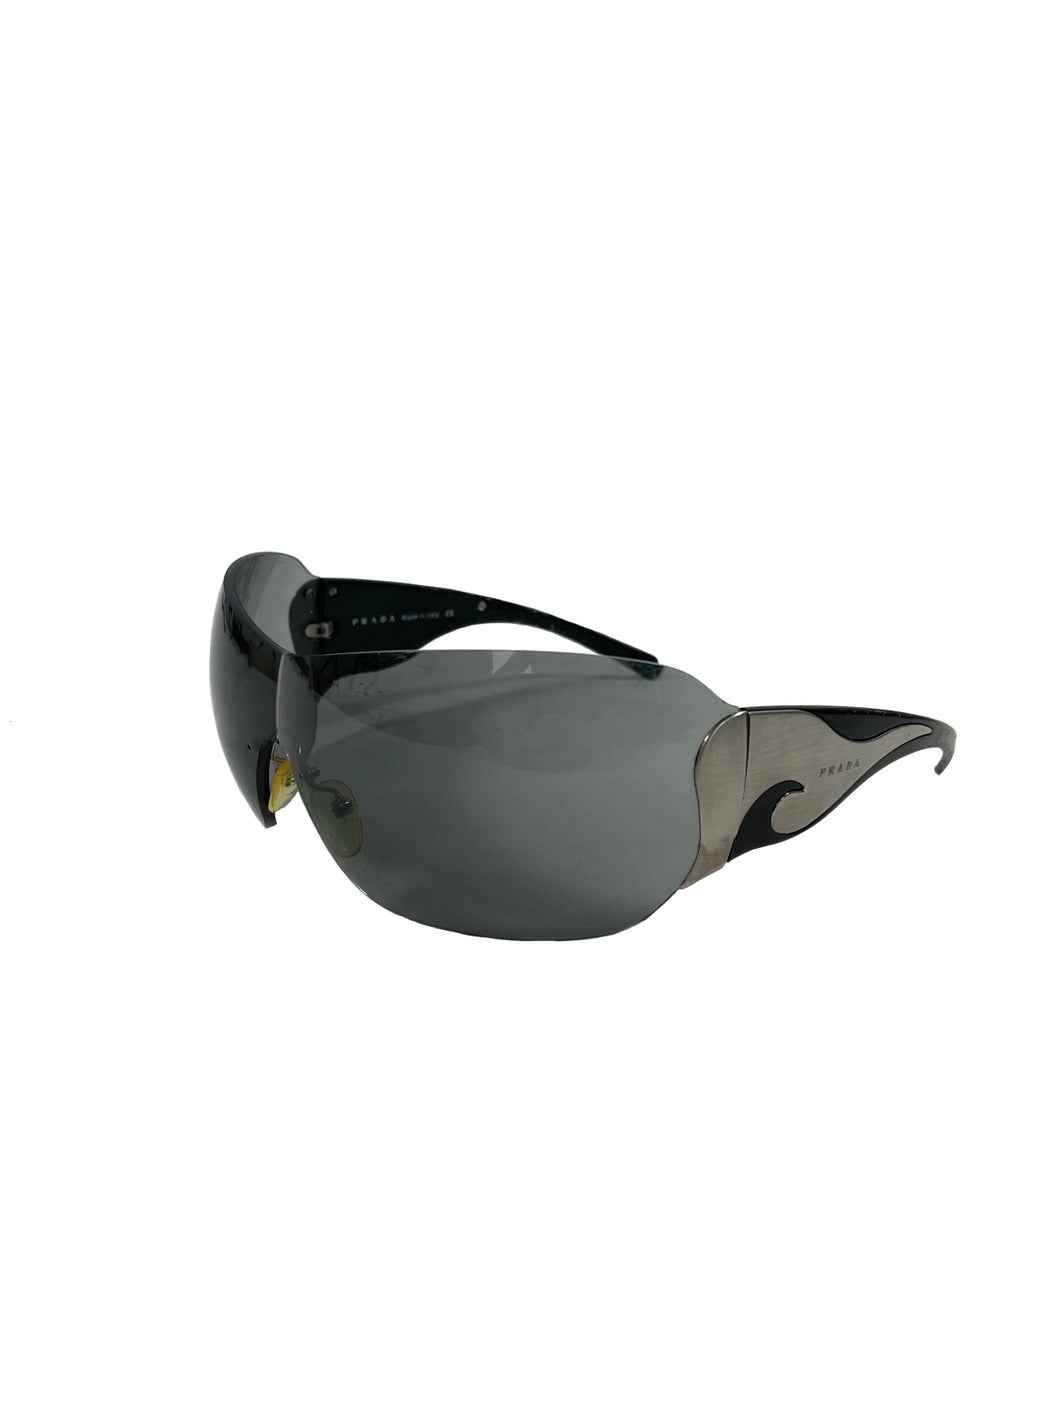 2004 Prada chrome wave visor sunglasses